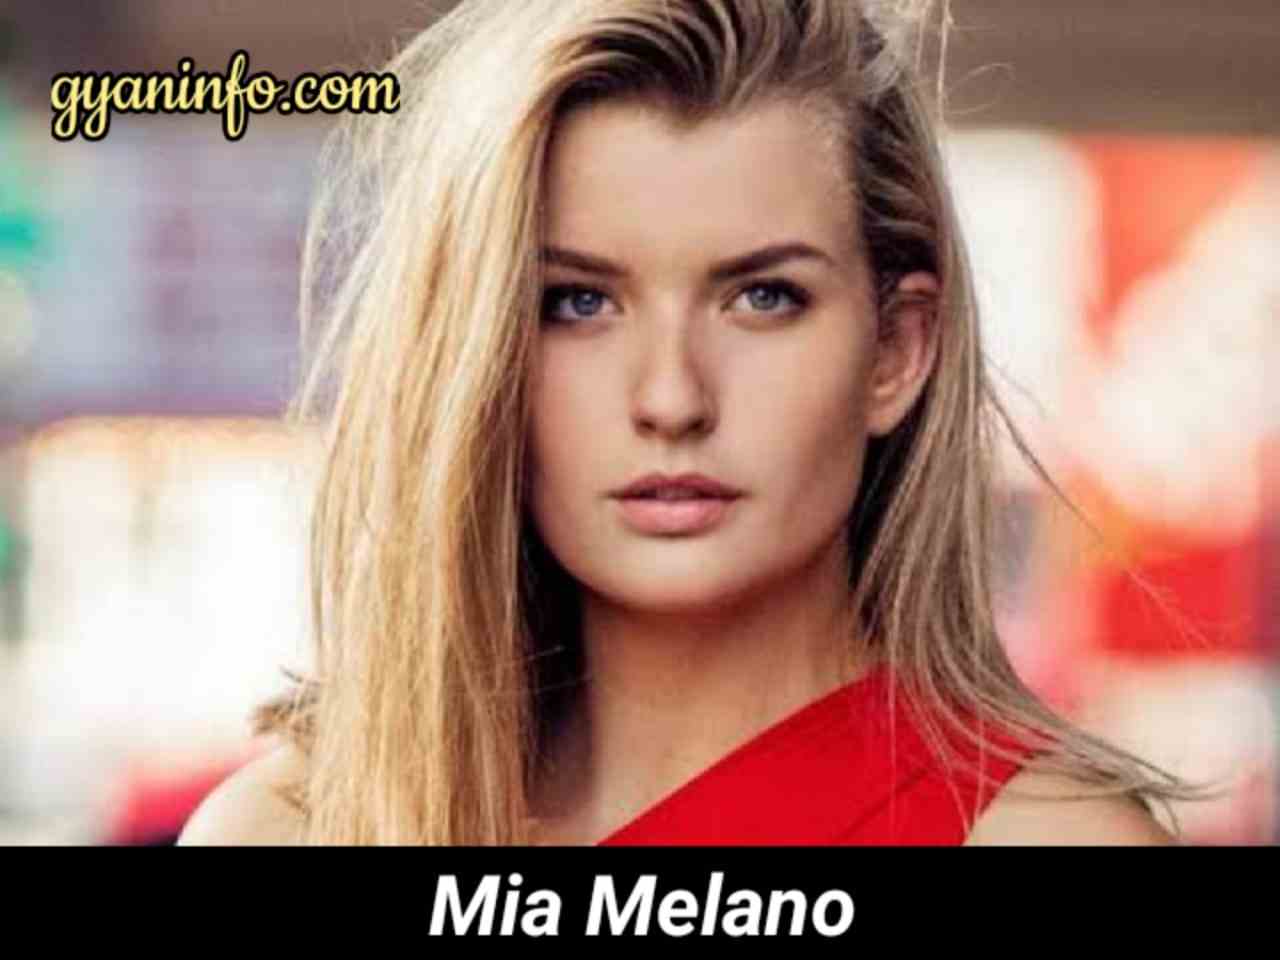 Mia Melano Biography, Height, Age, Weight, Body Measurements, Boyfriend, Net Worth, Wiki & More